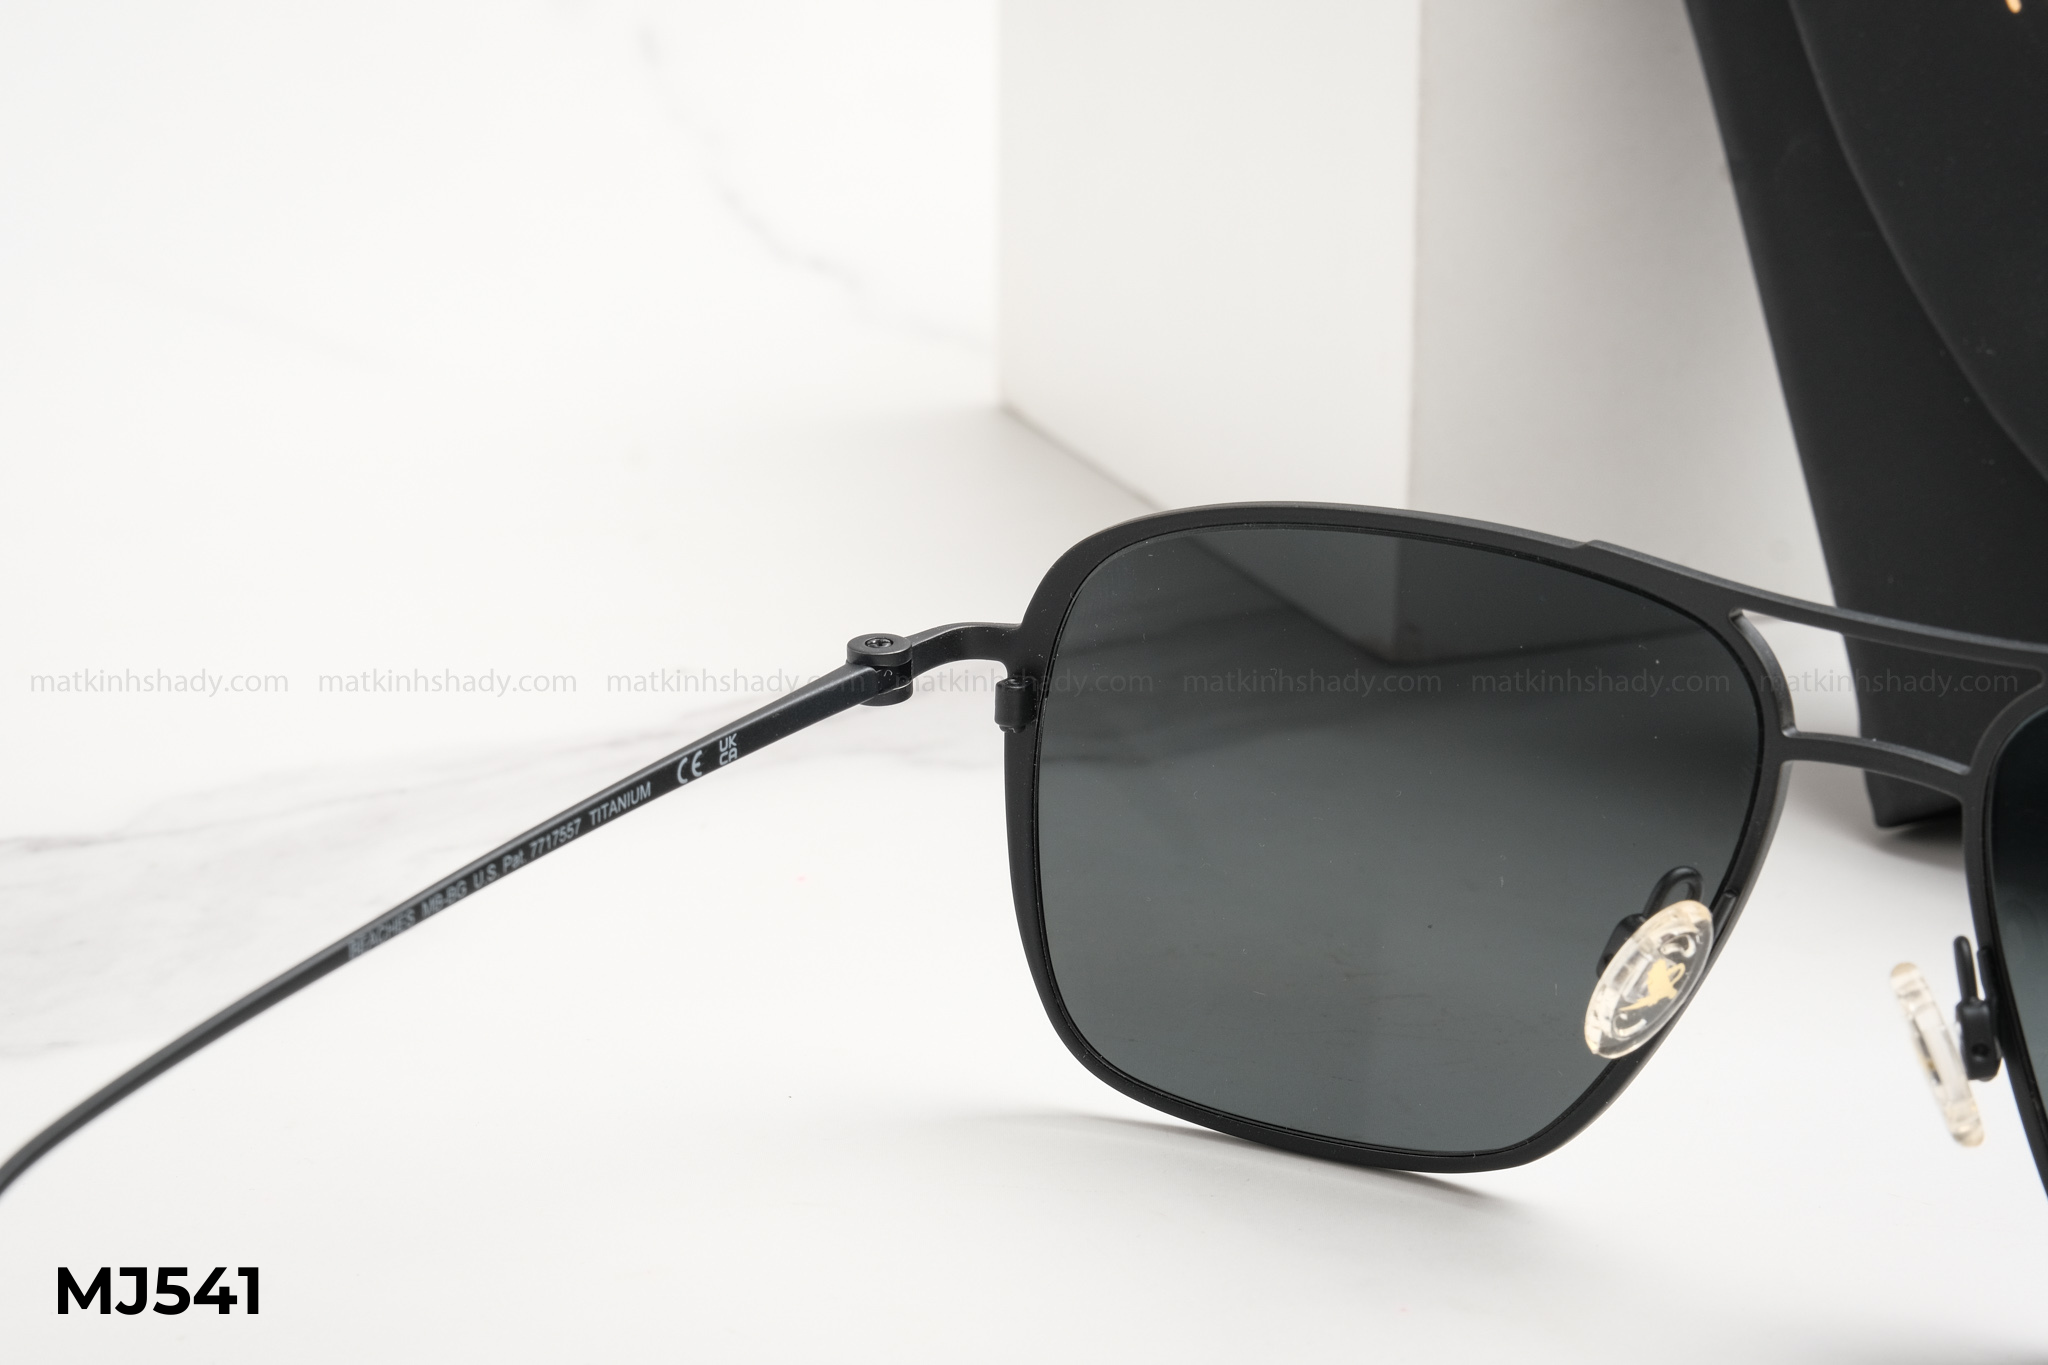  Maui Jim Eyewear - Sunglasses - MJ541 